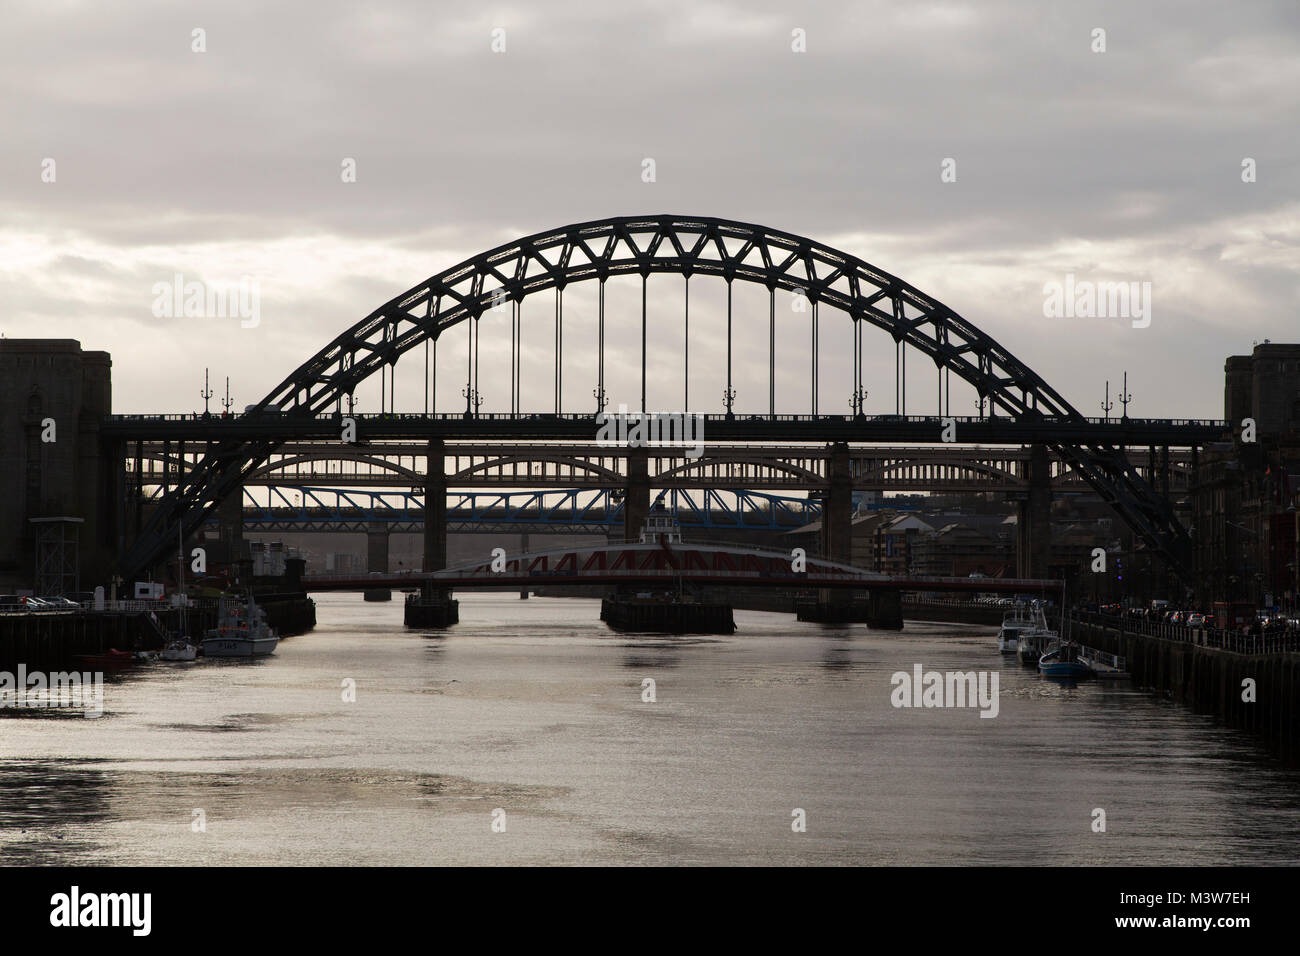 The Tyne Bridge crosses the River Tyne between Gateshead and Newcastle upon Tyne, England. Stock Photo